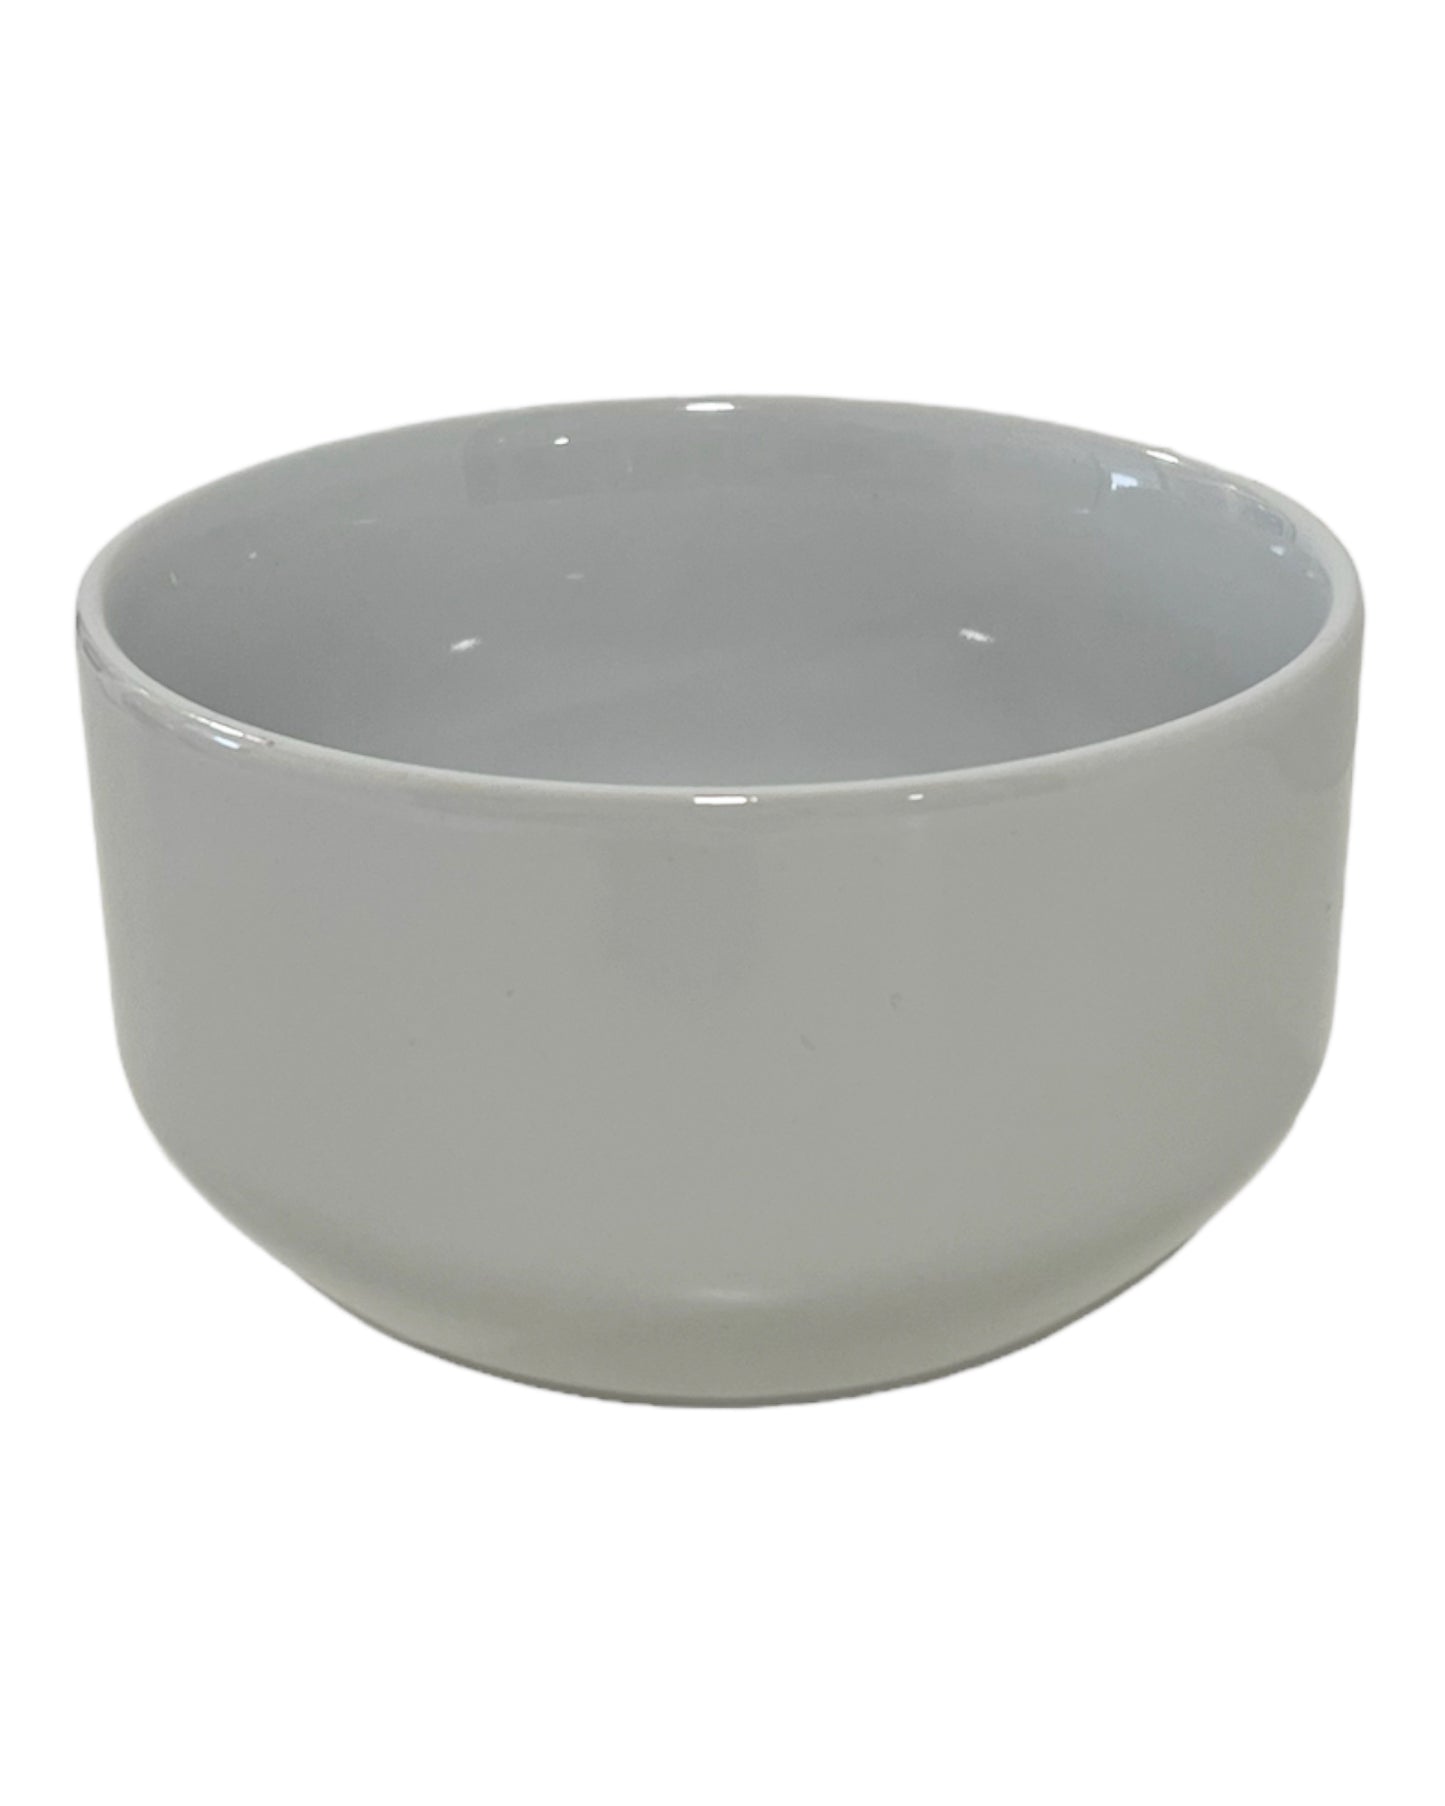 Ceramic cereal bowl